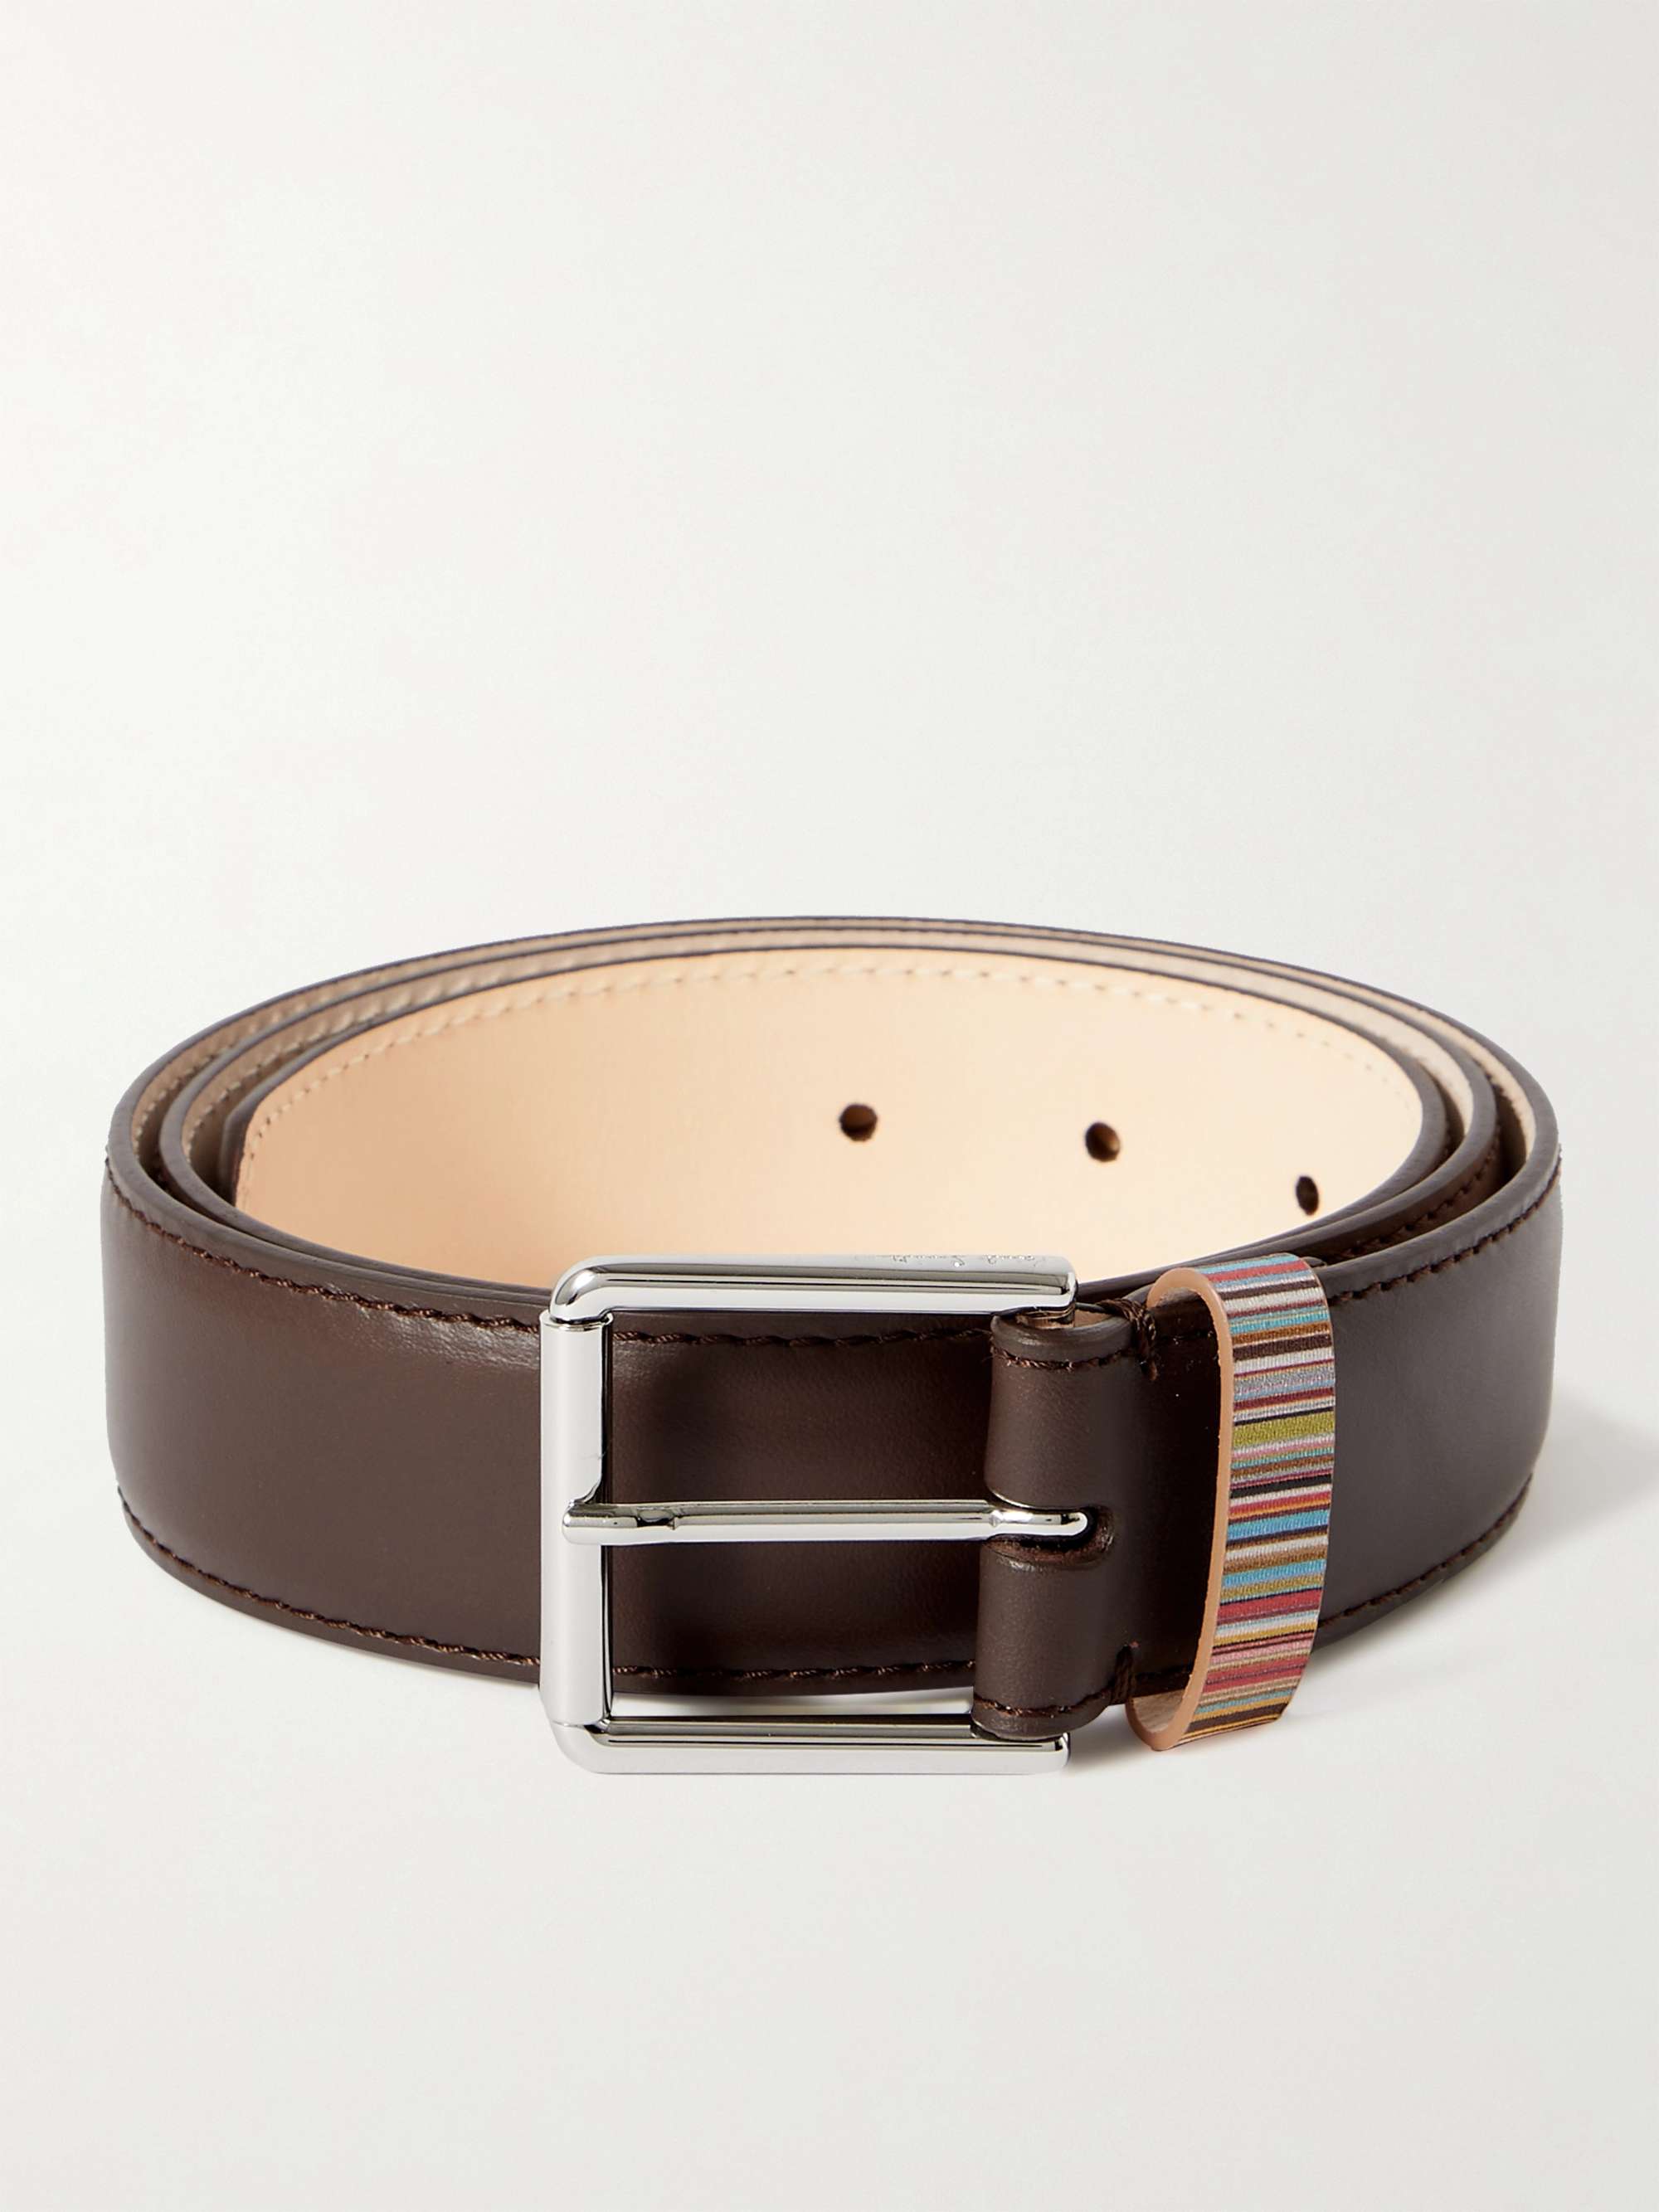 Luxury Genuine Leather Belts for Men Belt Pants Belt Striped Strap For Male 3.5cm Belt 